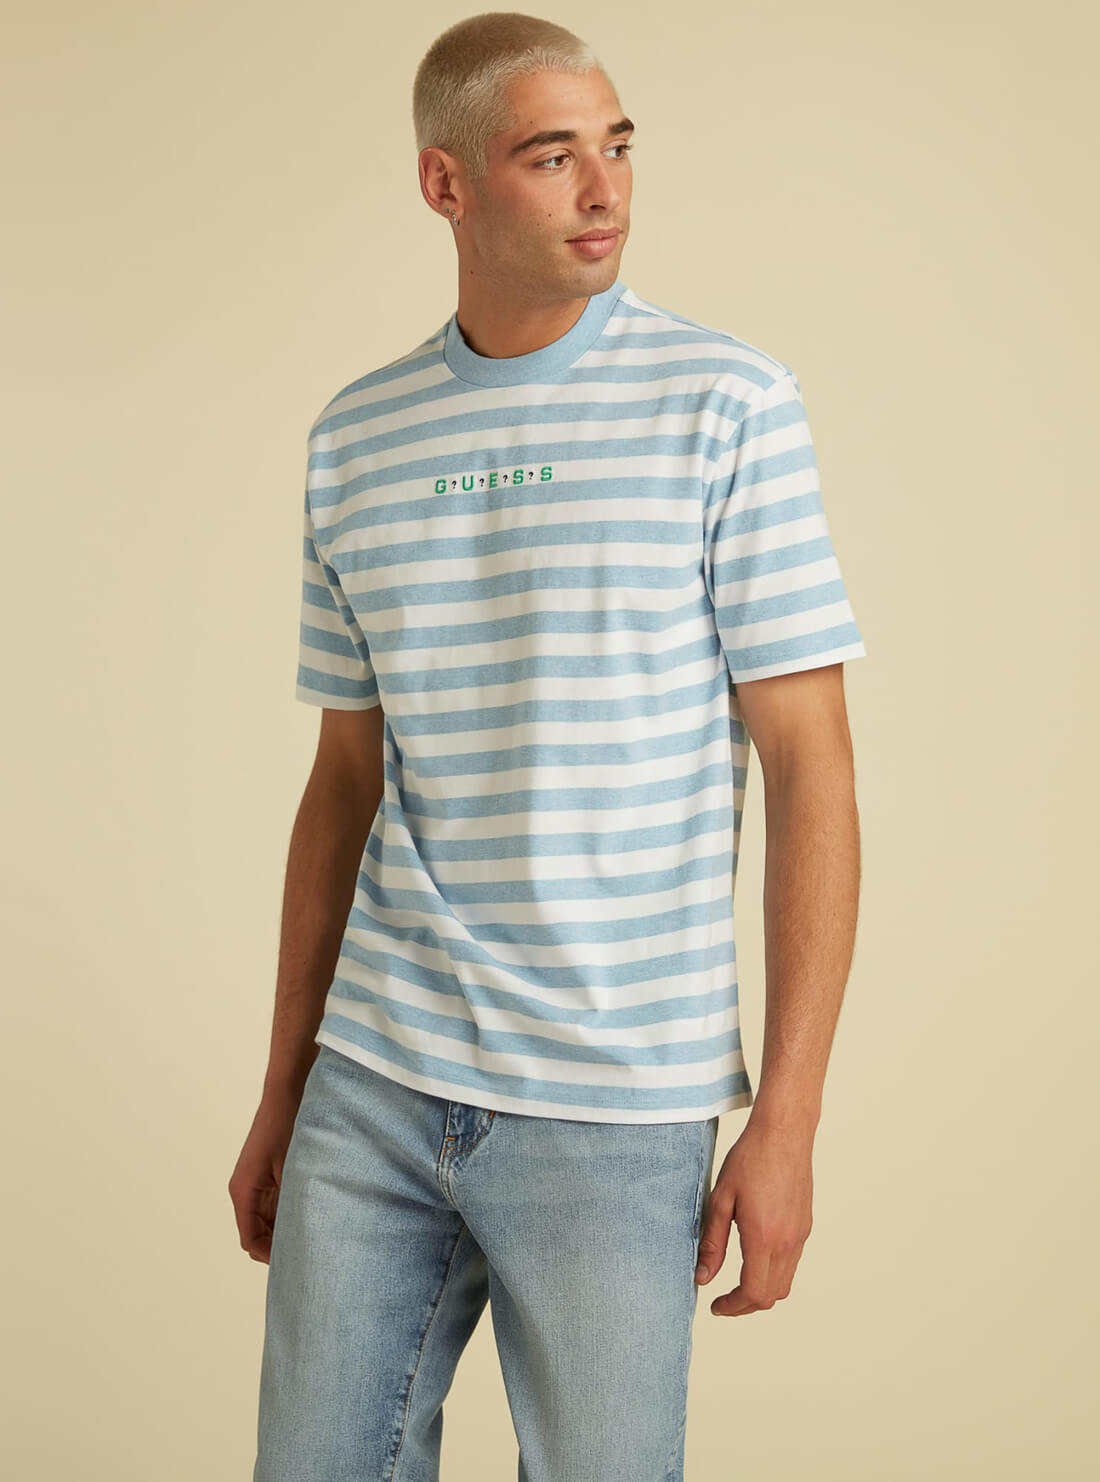 GUESS Mens GUESS Originals Blue Striped Logo T-Shirt M1GI12RAGP0 Model Front View